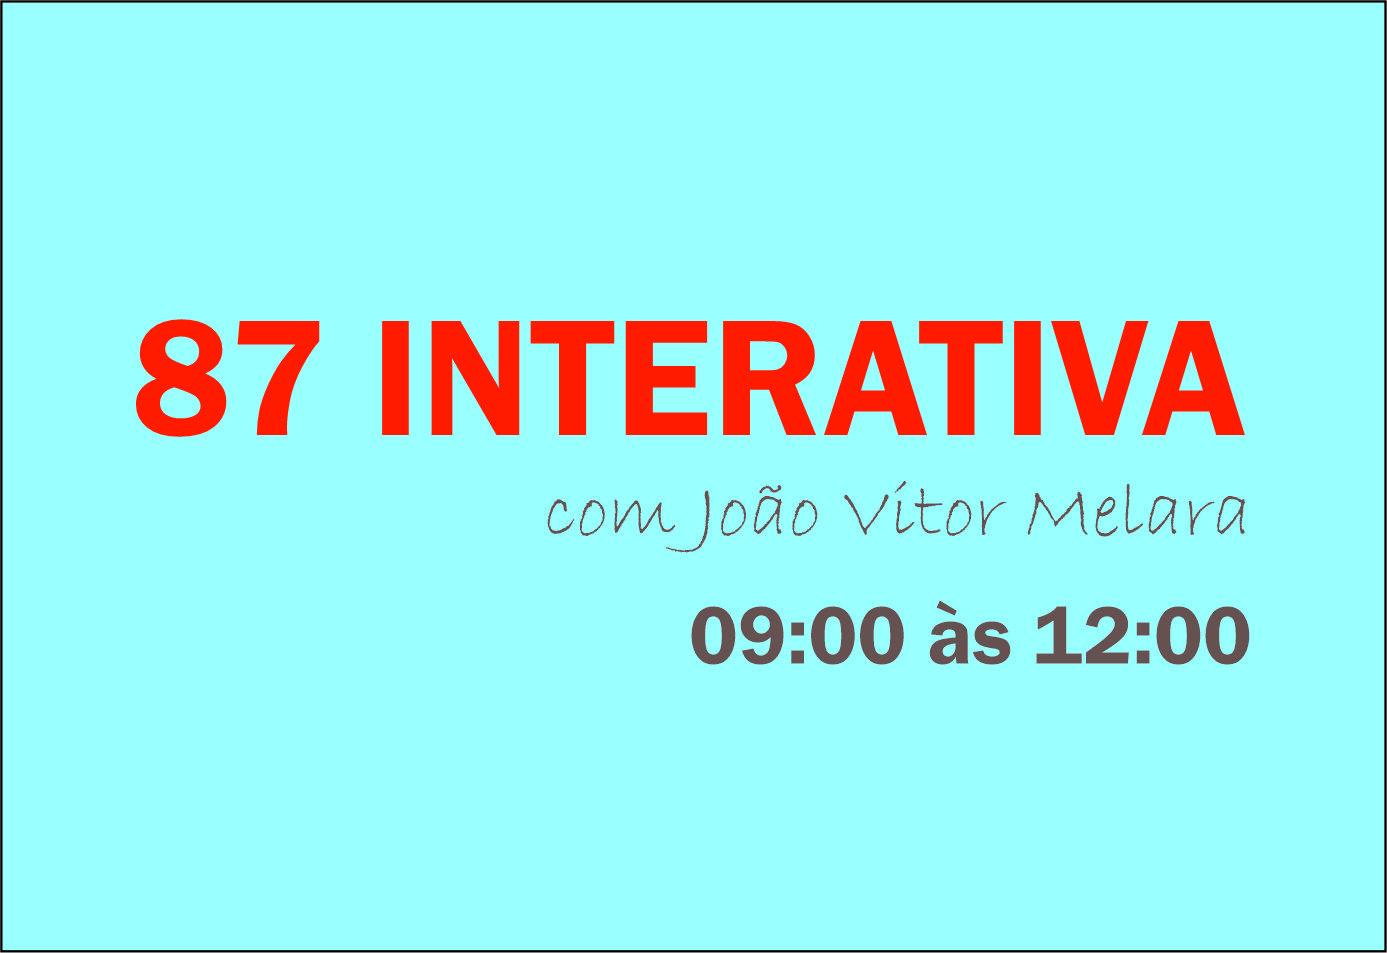 87 Interativa